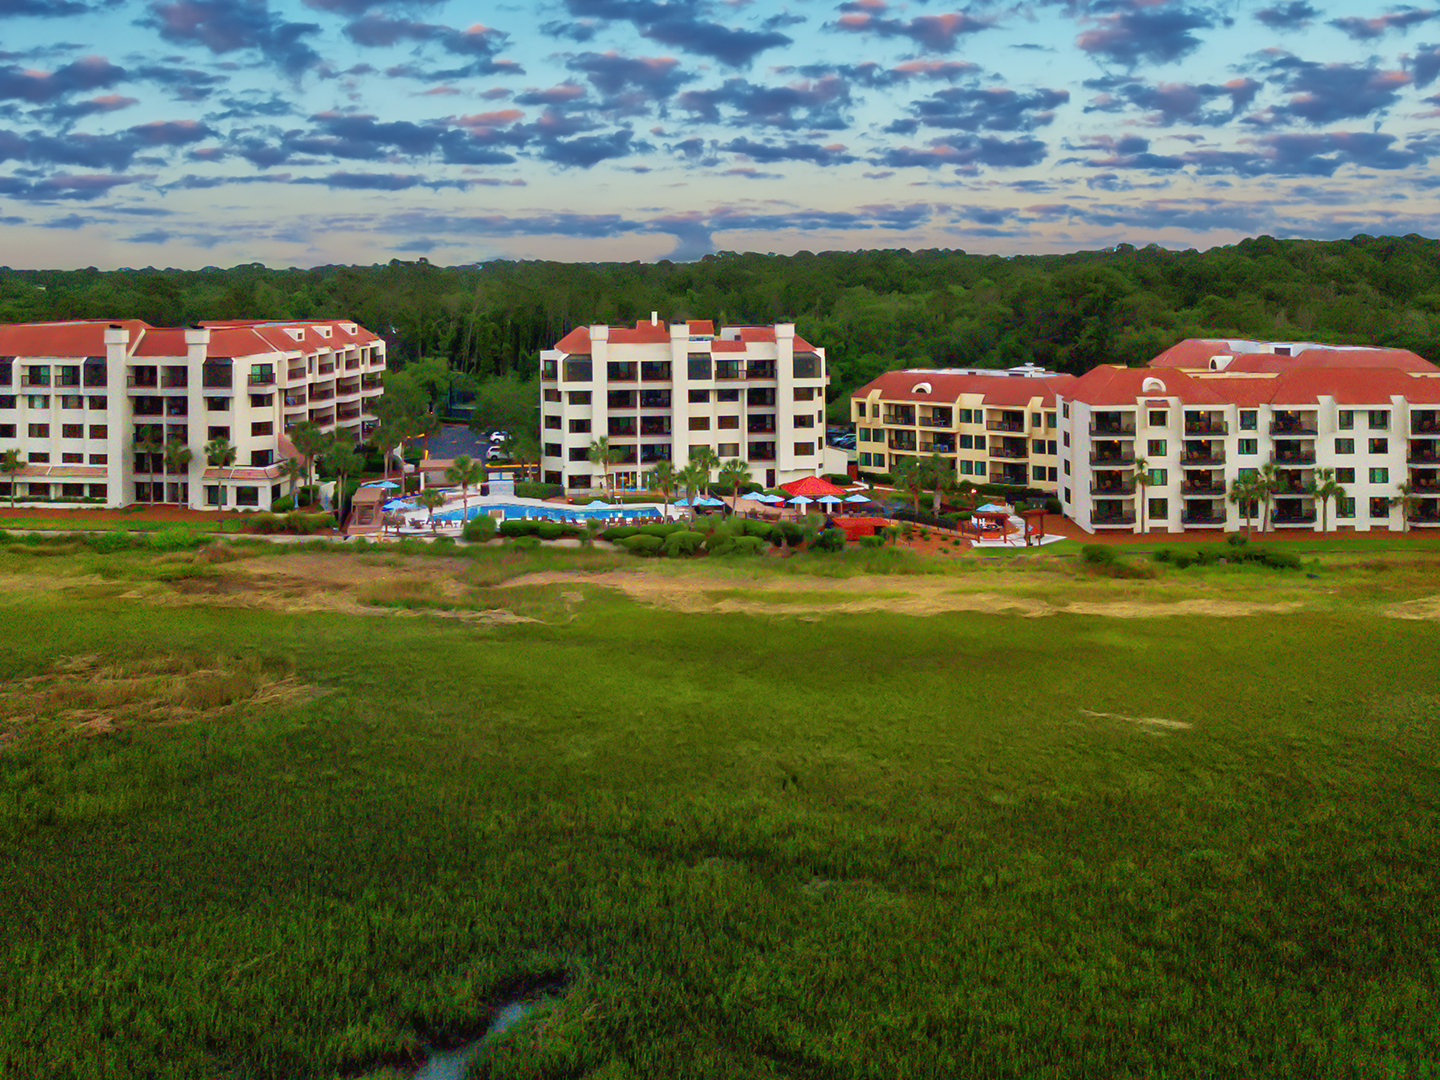 Marriott's Sunset Pointe Exterior Aerial View. Marriott's Sunset Pointe is located in Hilton Head Island, South Carolina United States.